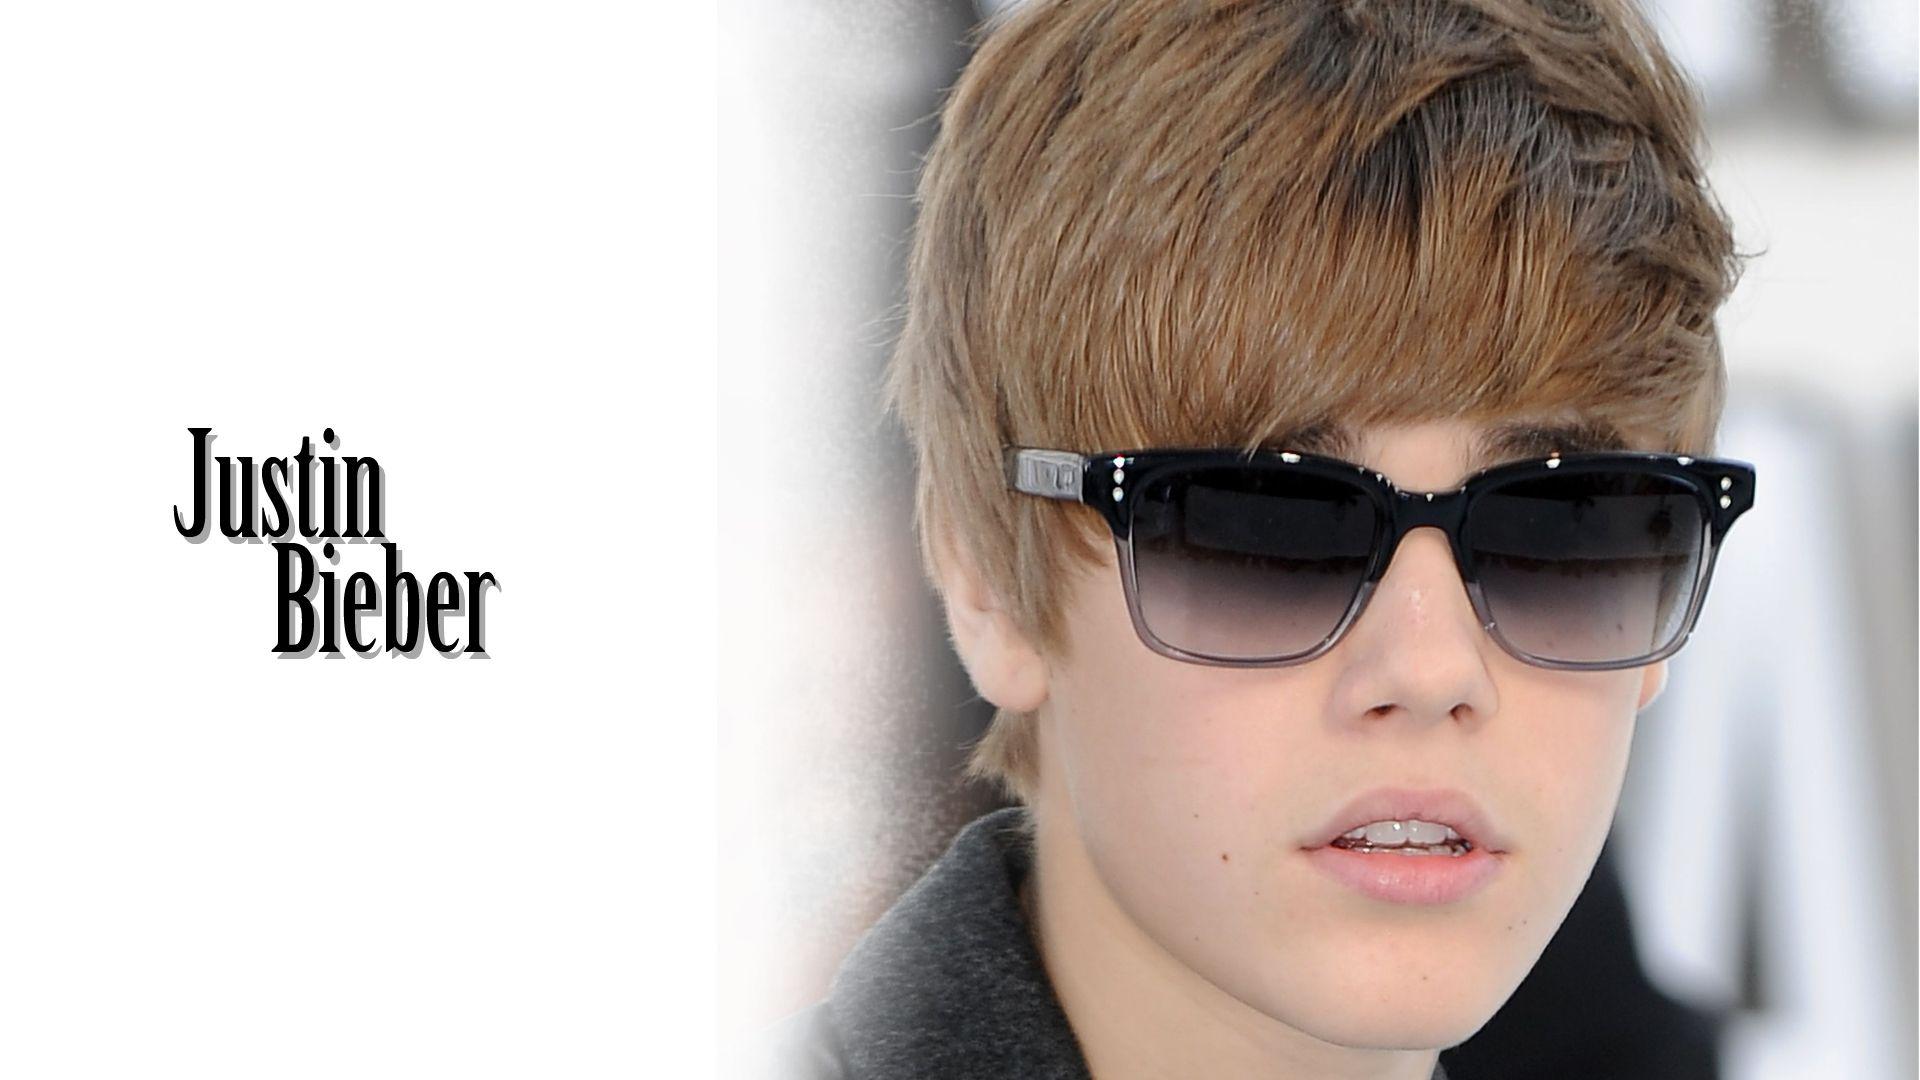 Justin Bieber Wallpaper. Full HD Picture